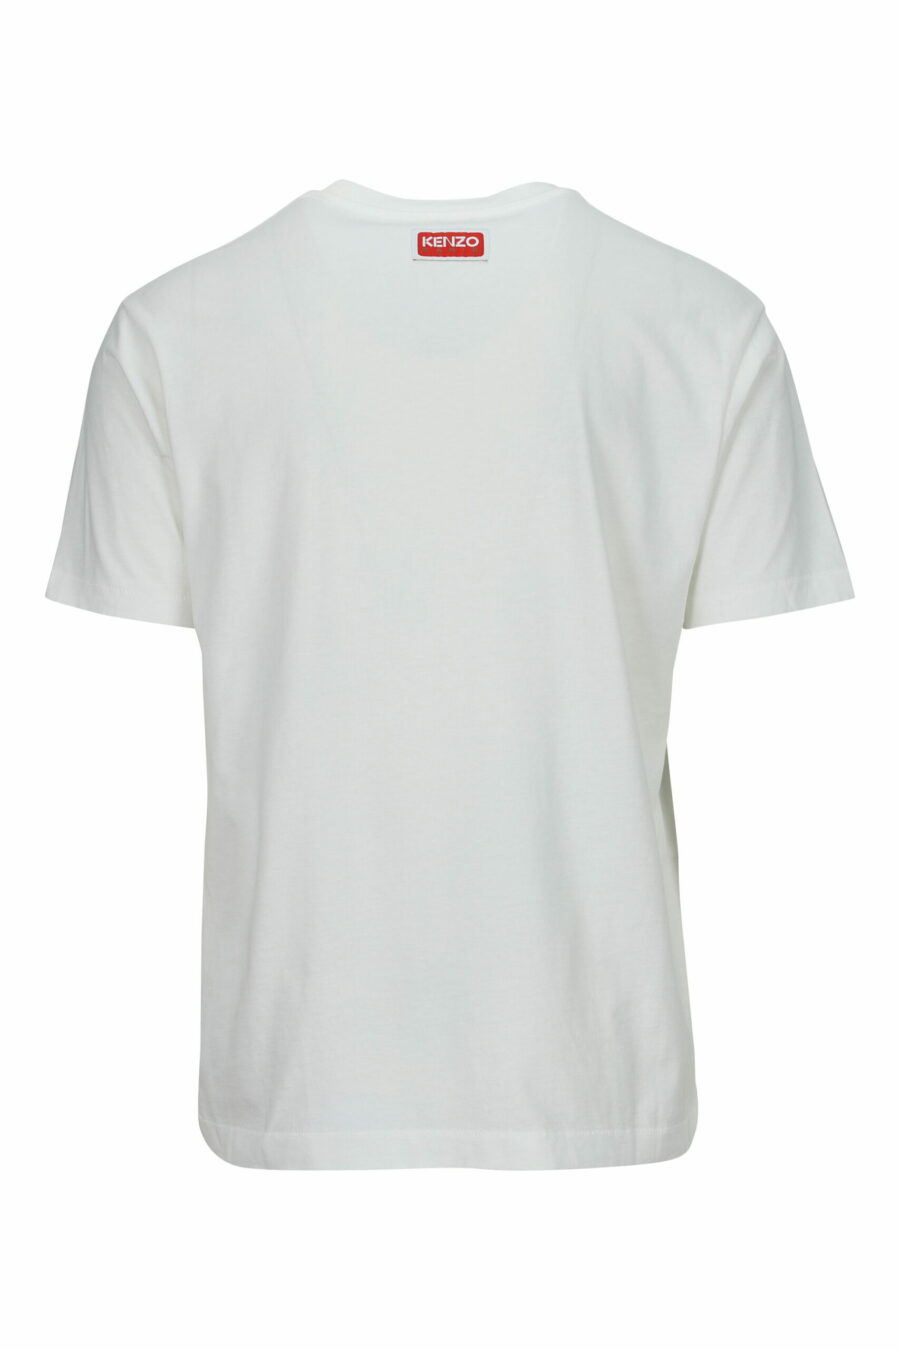 Camiseta blanca "oversize" logo grande tigre relieve - 3612230568013 1 scaled